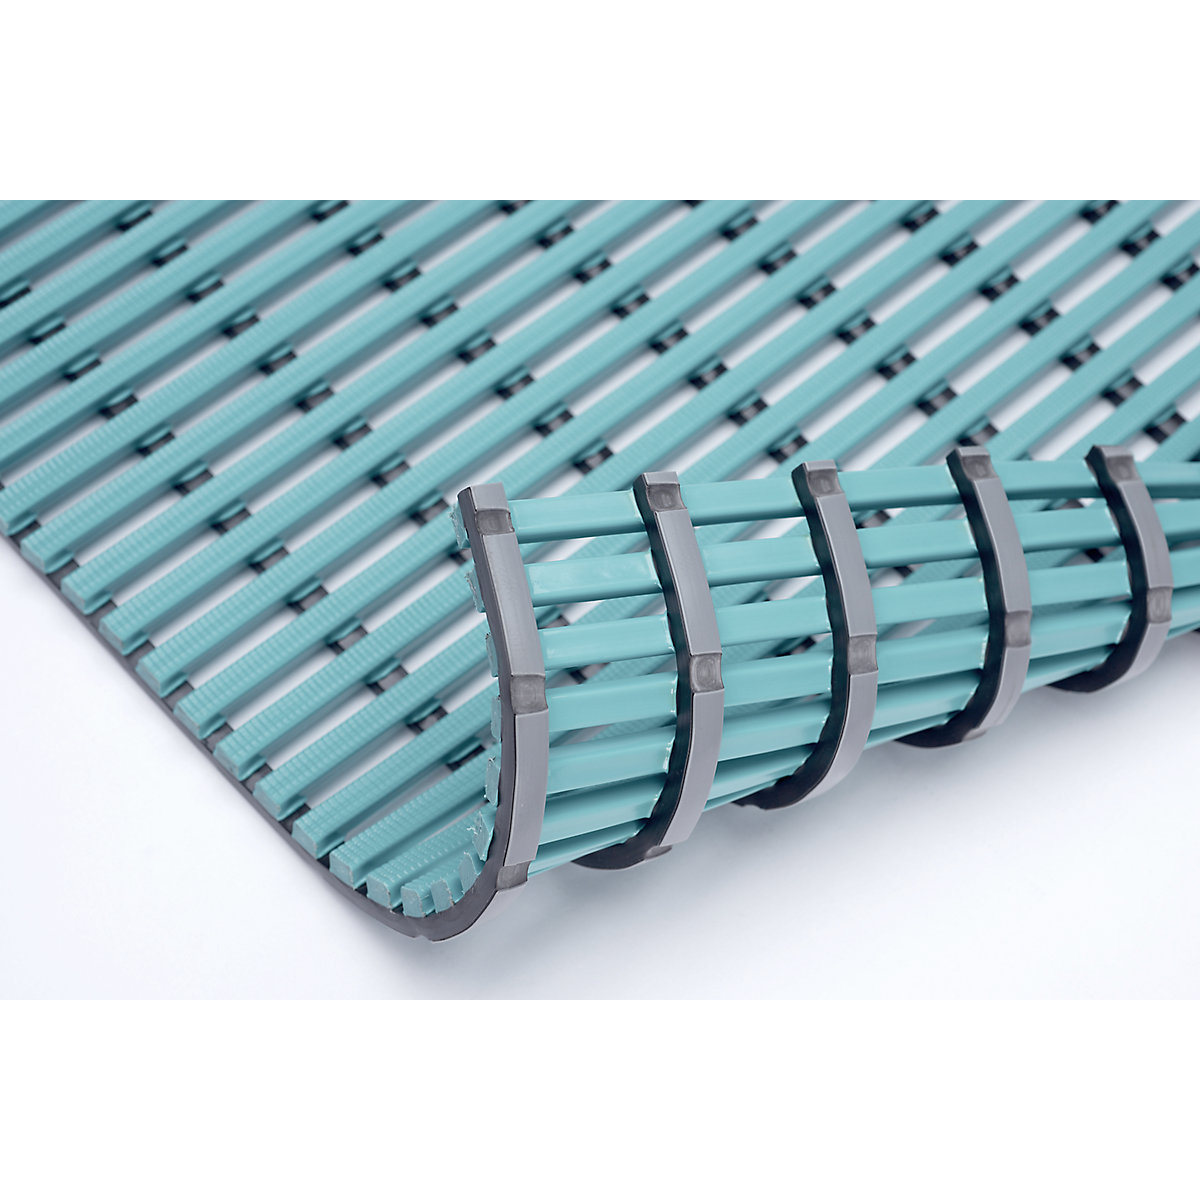 Wet room mat, anti-bacterial – EHA, per metre, mint, width 600 mm-4